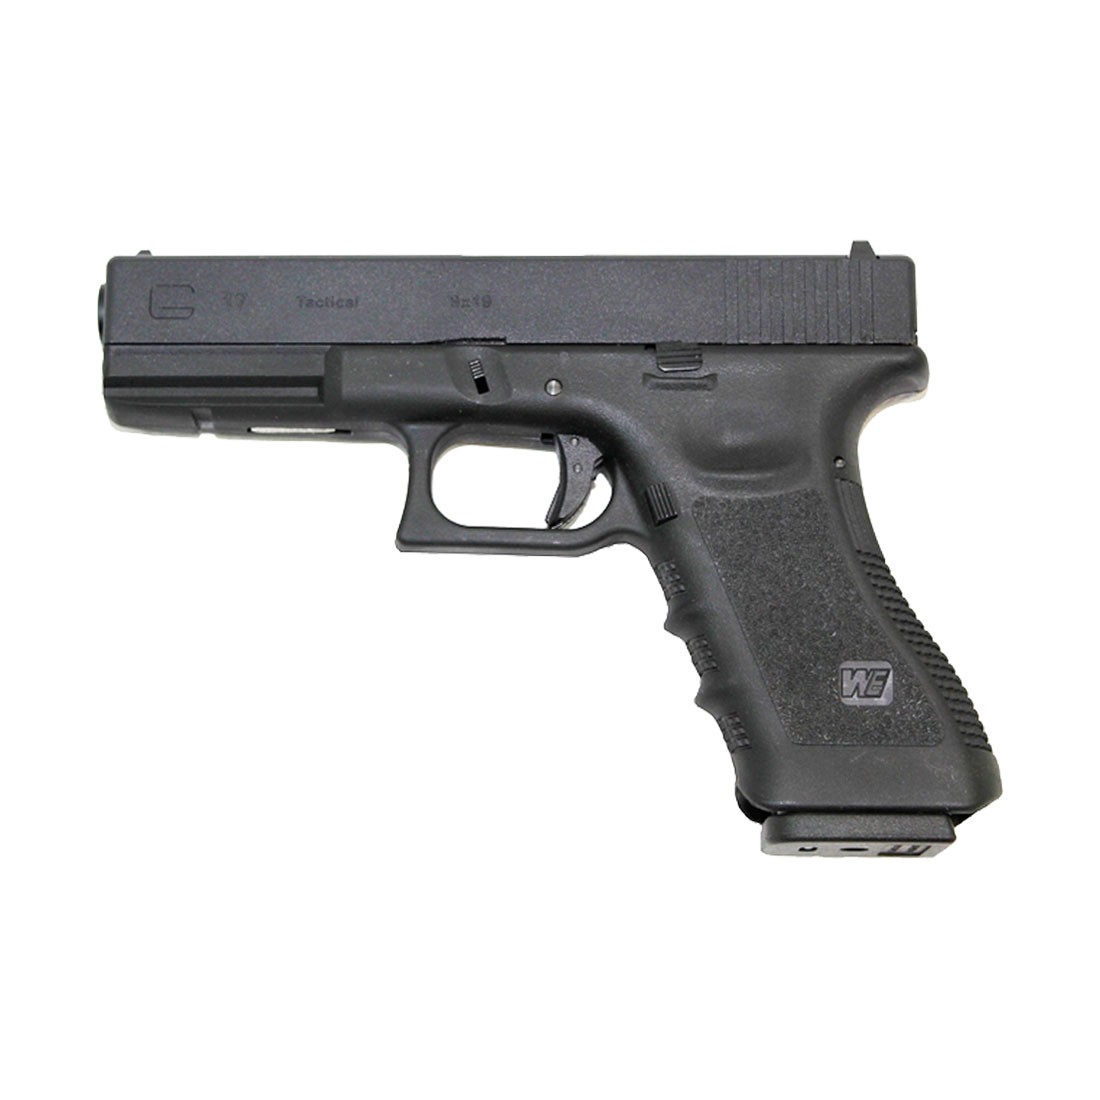 WE Glock 17 Gen 3 GBB Pistol (Black)